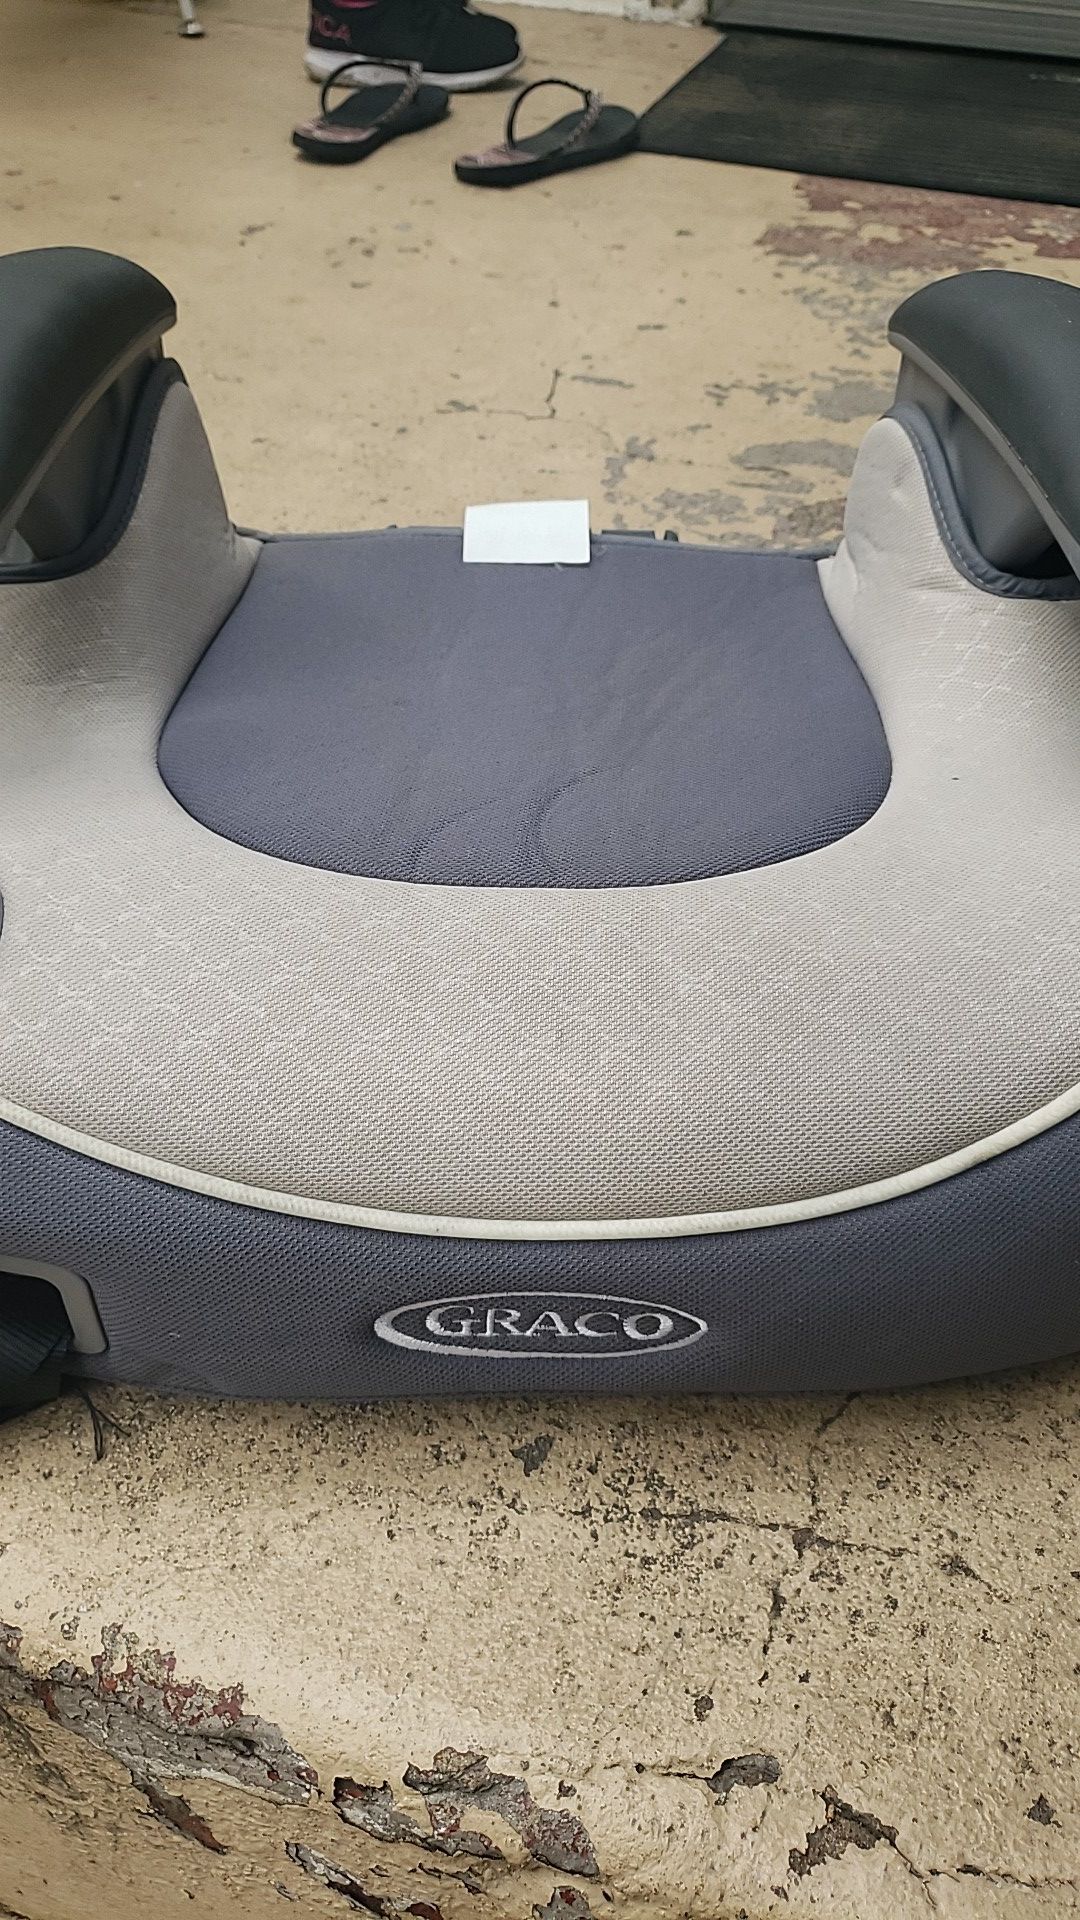 Graco car backless booster Affix model 2014